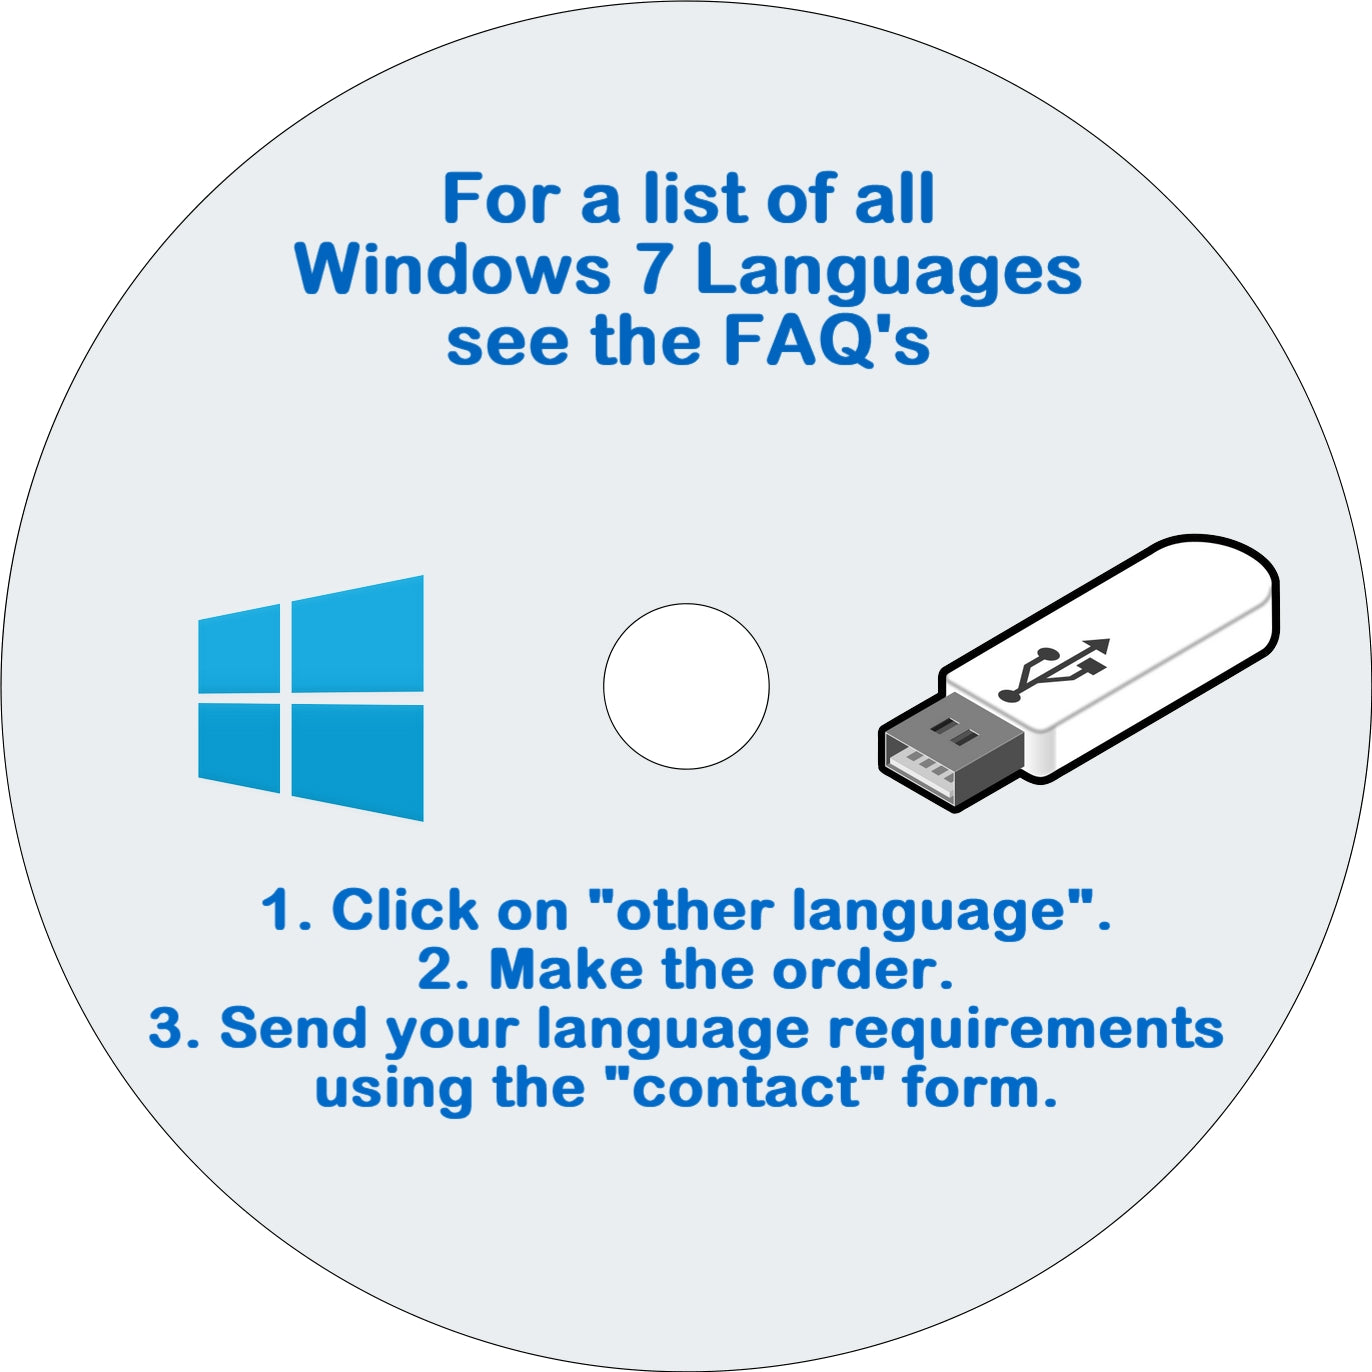 Windows 7 Pro Disk 32 Bit